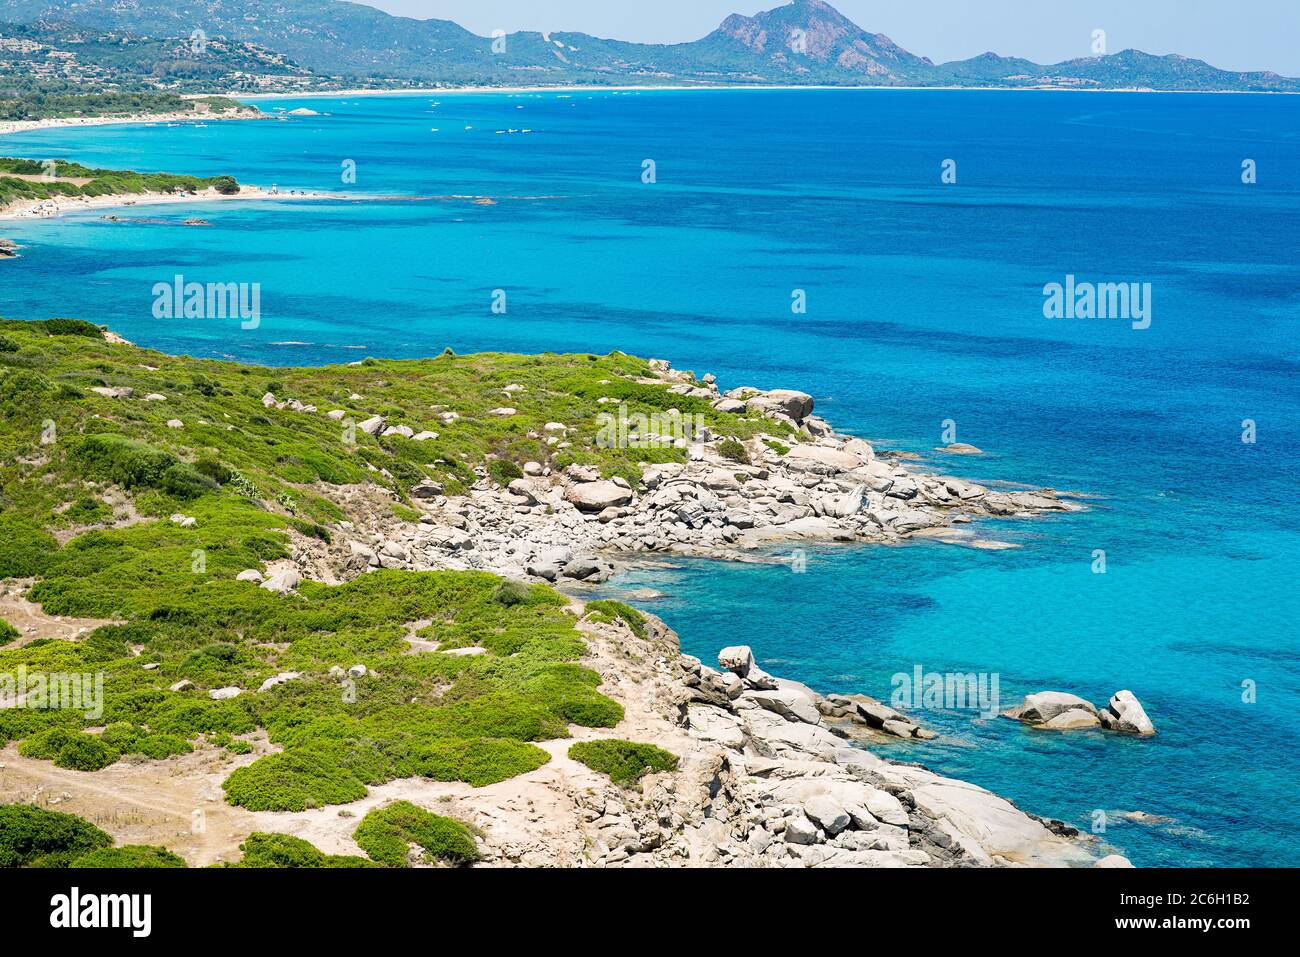 Mediterranean Sea And Coast Of Italian Island Sardinia Panoramic